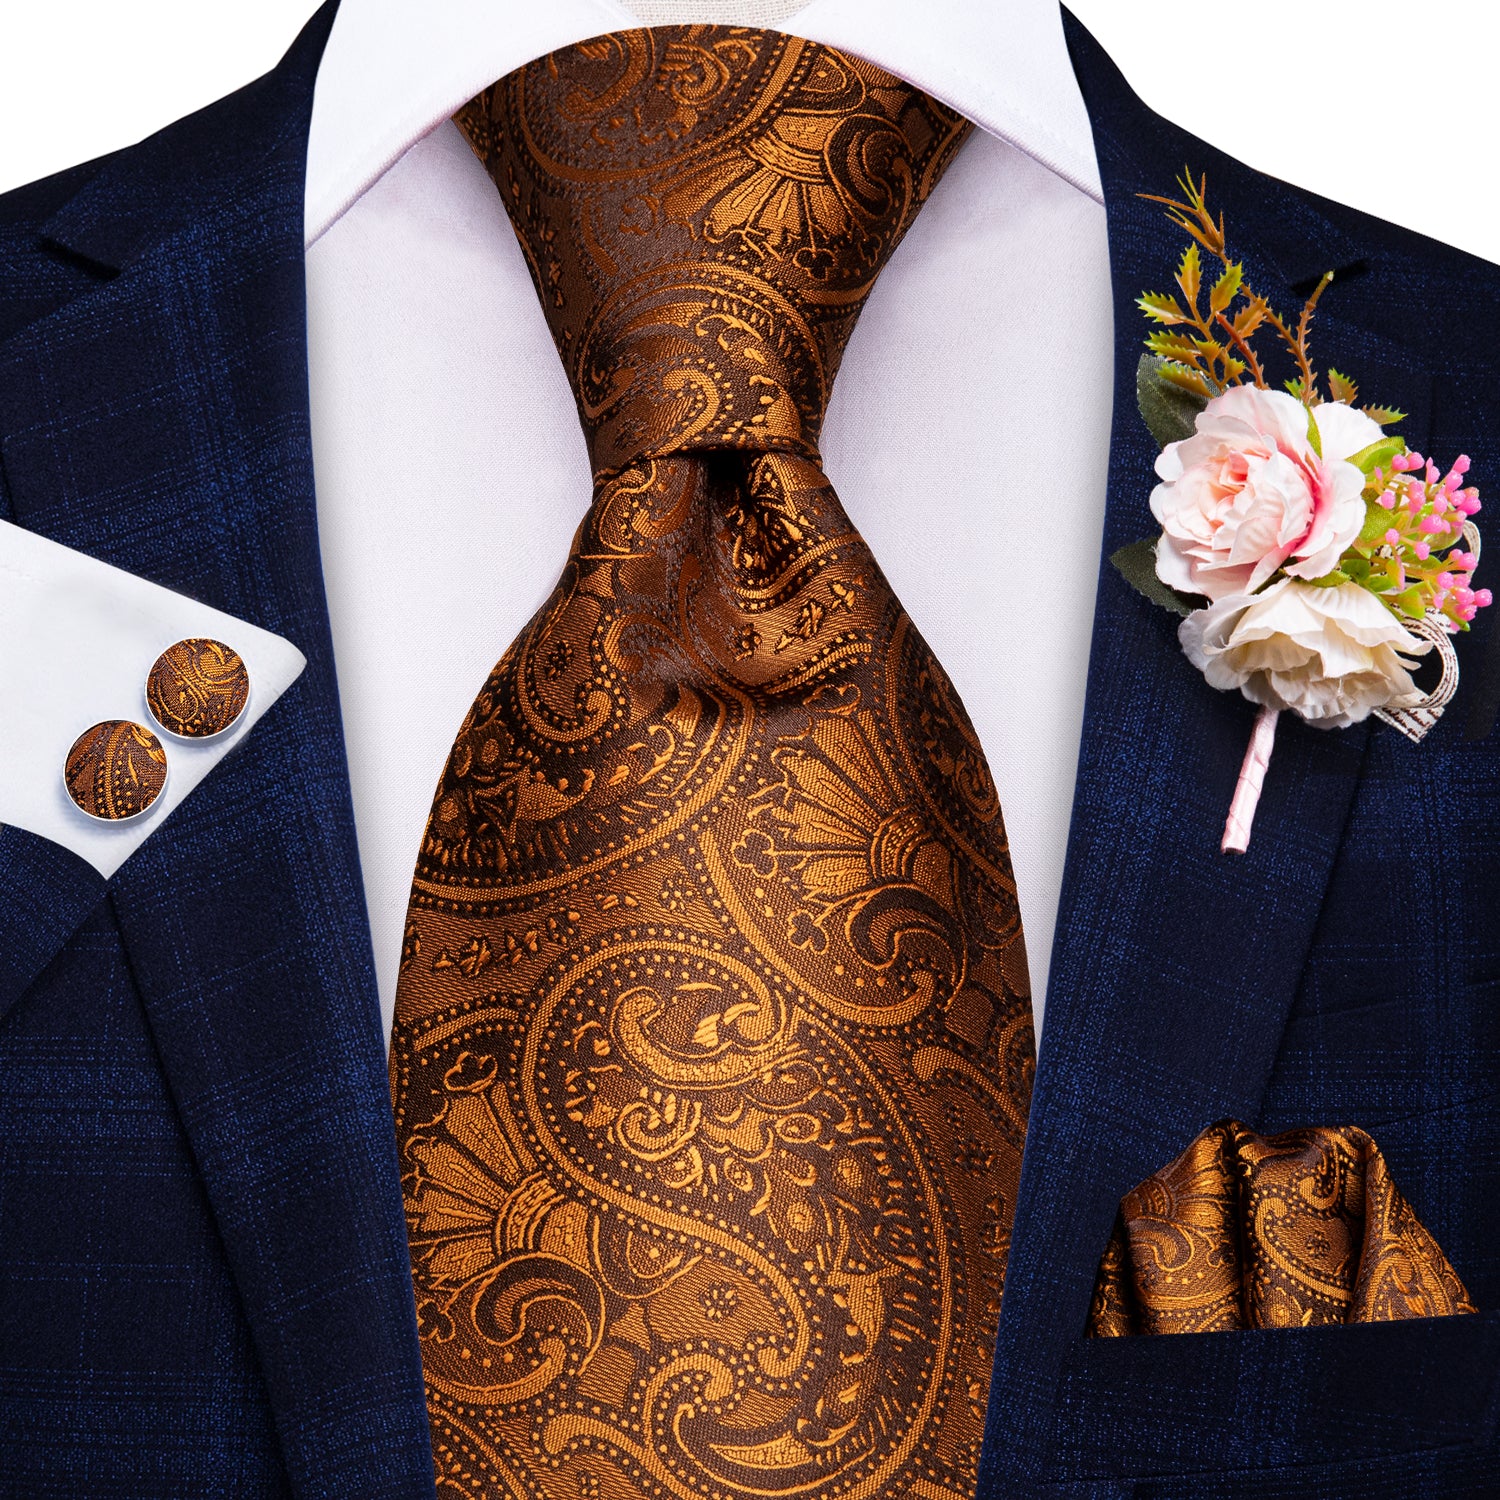 Royal Yellow Floral Tie Handkerchief Cufflinks Set with Wedding Brooch